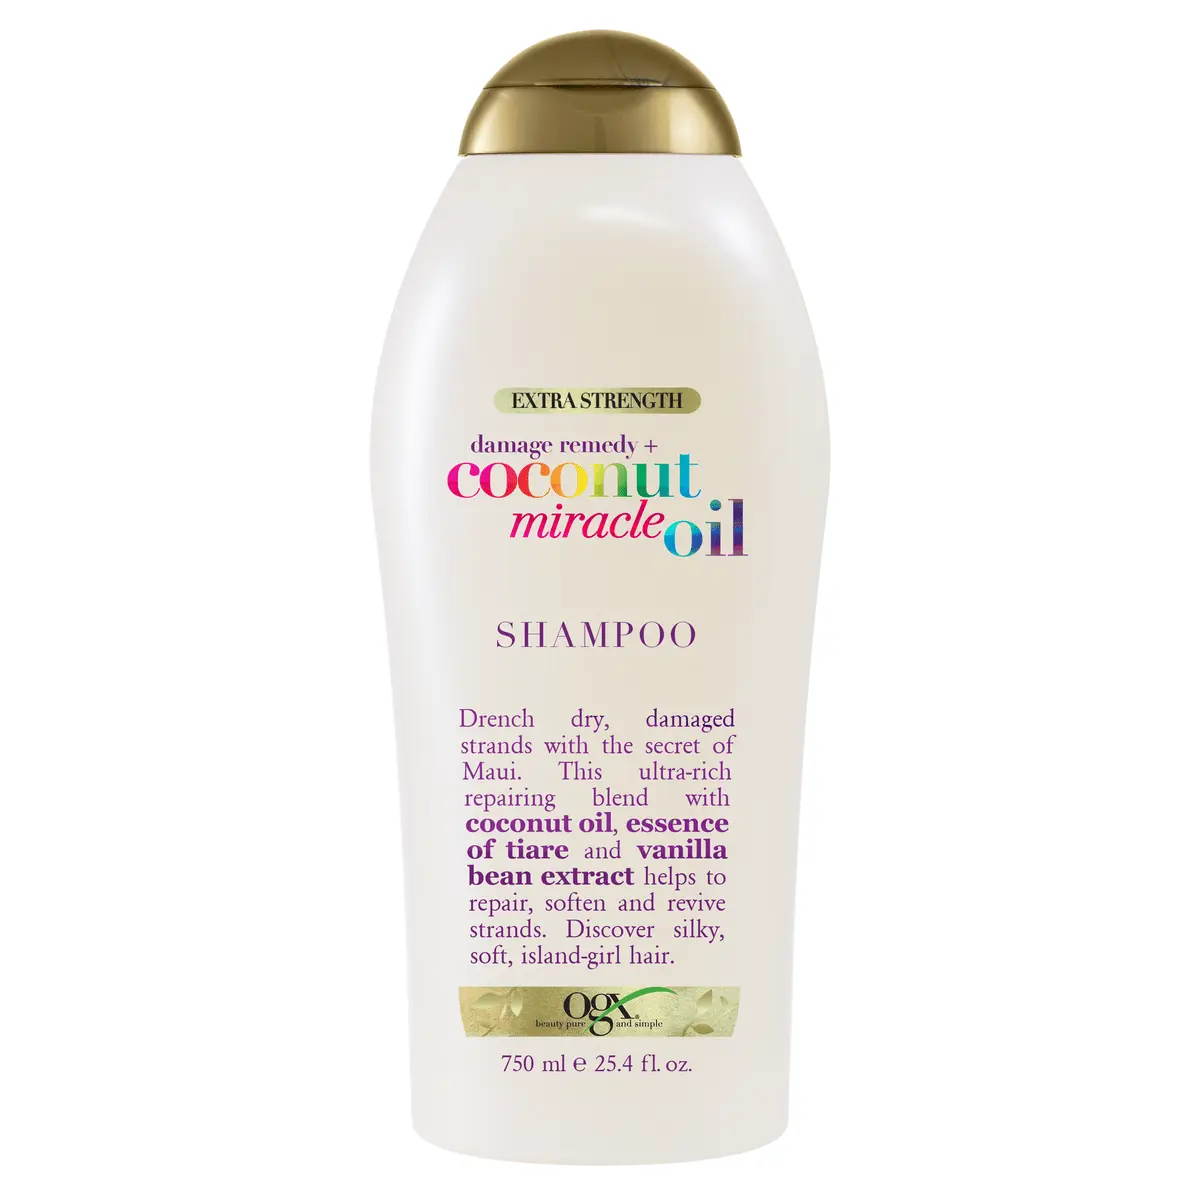 Extra Strength Damage Remedy + Coconut Miracle Oil Salon Size Shampoo 25.4 fl oz (1)